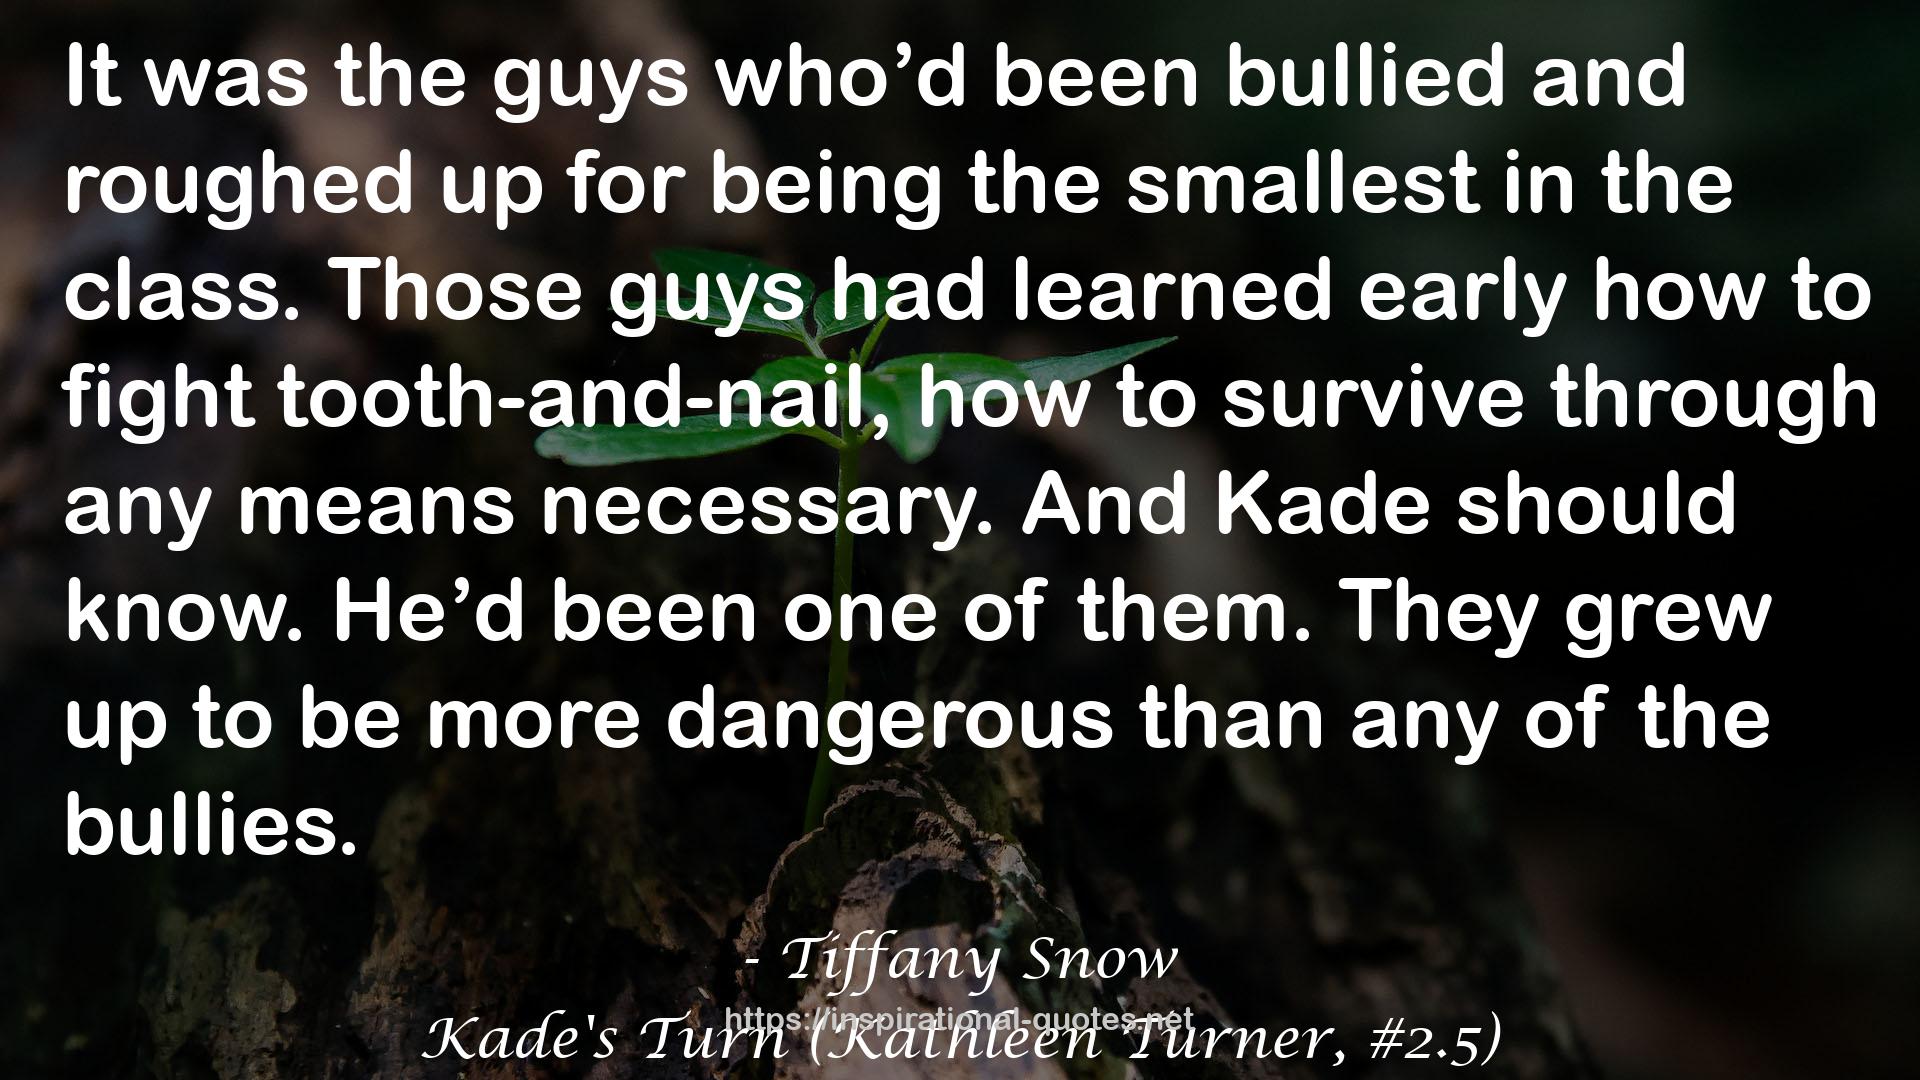 Kade's Turn (Kathleen Turner, #2.5) QUOTES